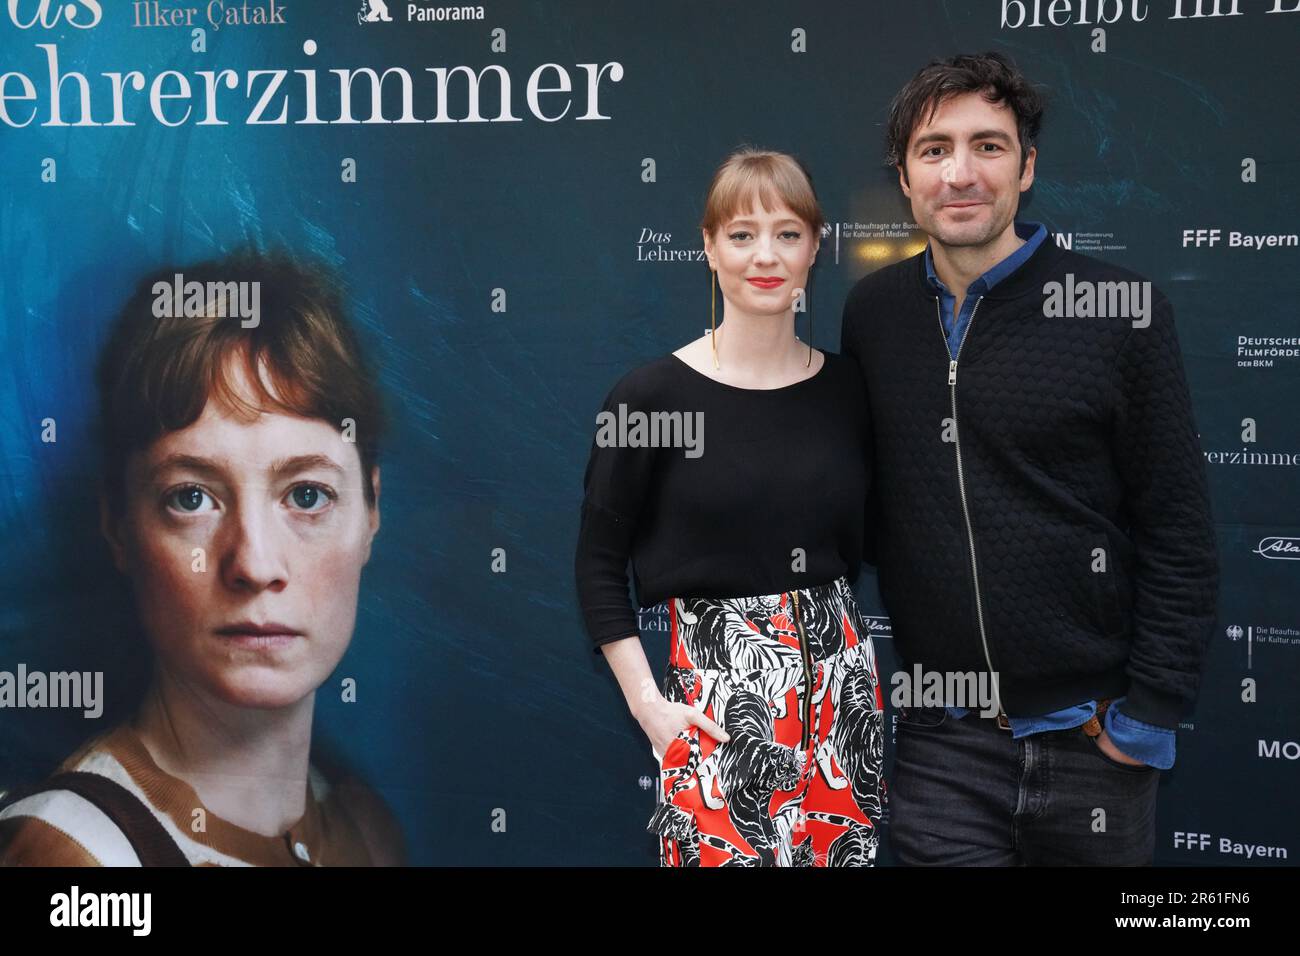 Director İlker Çatak and Actress Leonie Benesch seen before the premiere screening of her fim 'Das Lehrerzimmer' at City Cinema in Munich Stock Photo